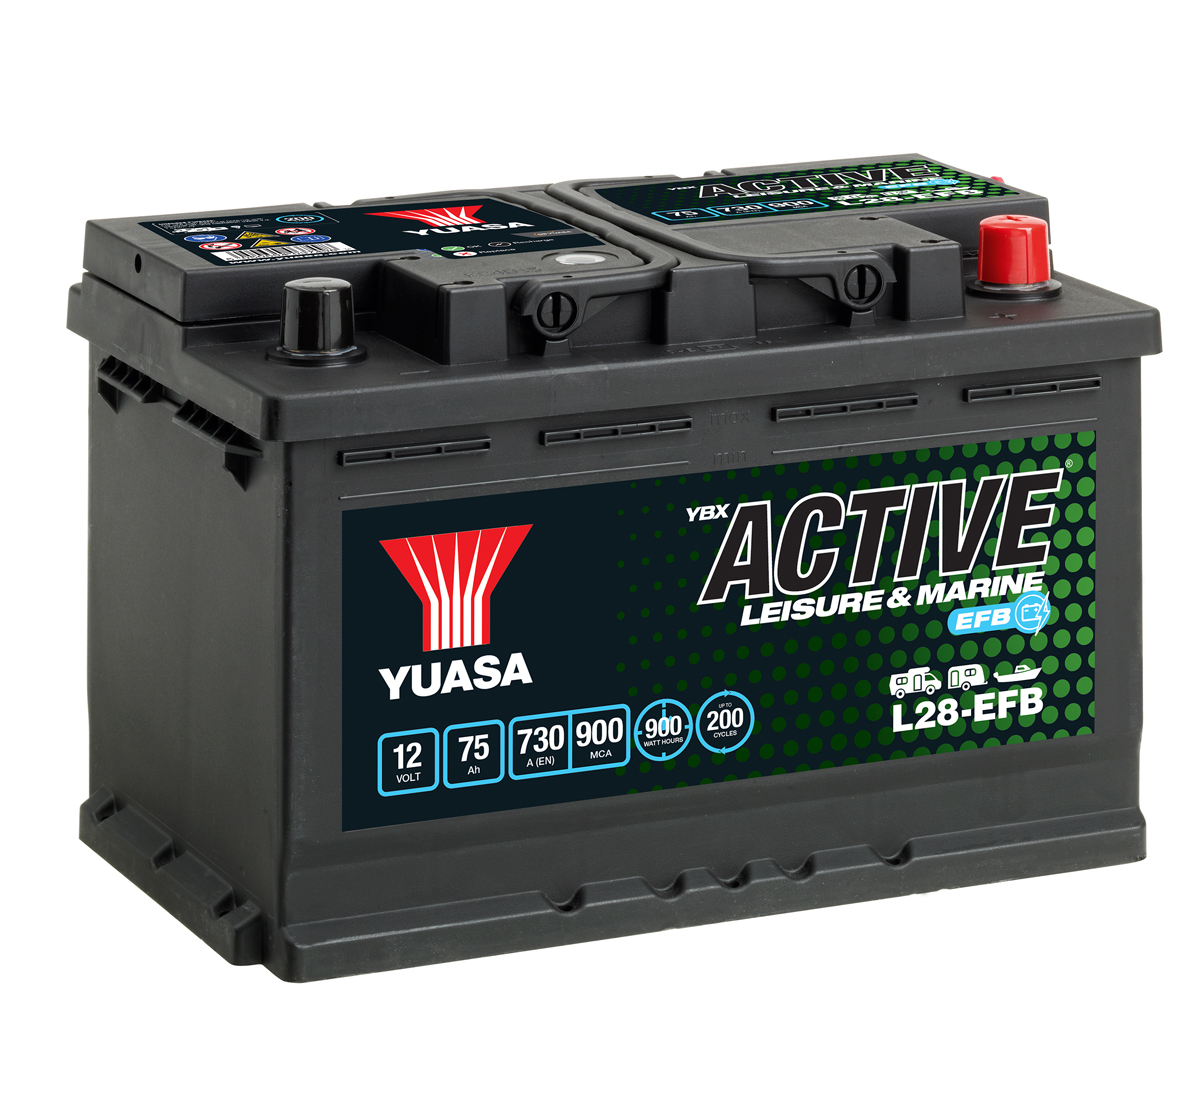 Yuasa YBX Active L28-EFB Leisure Battery